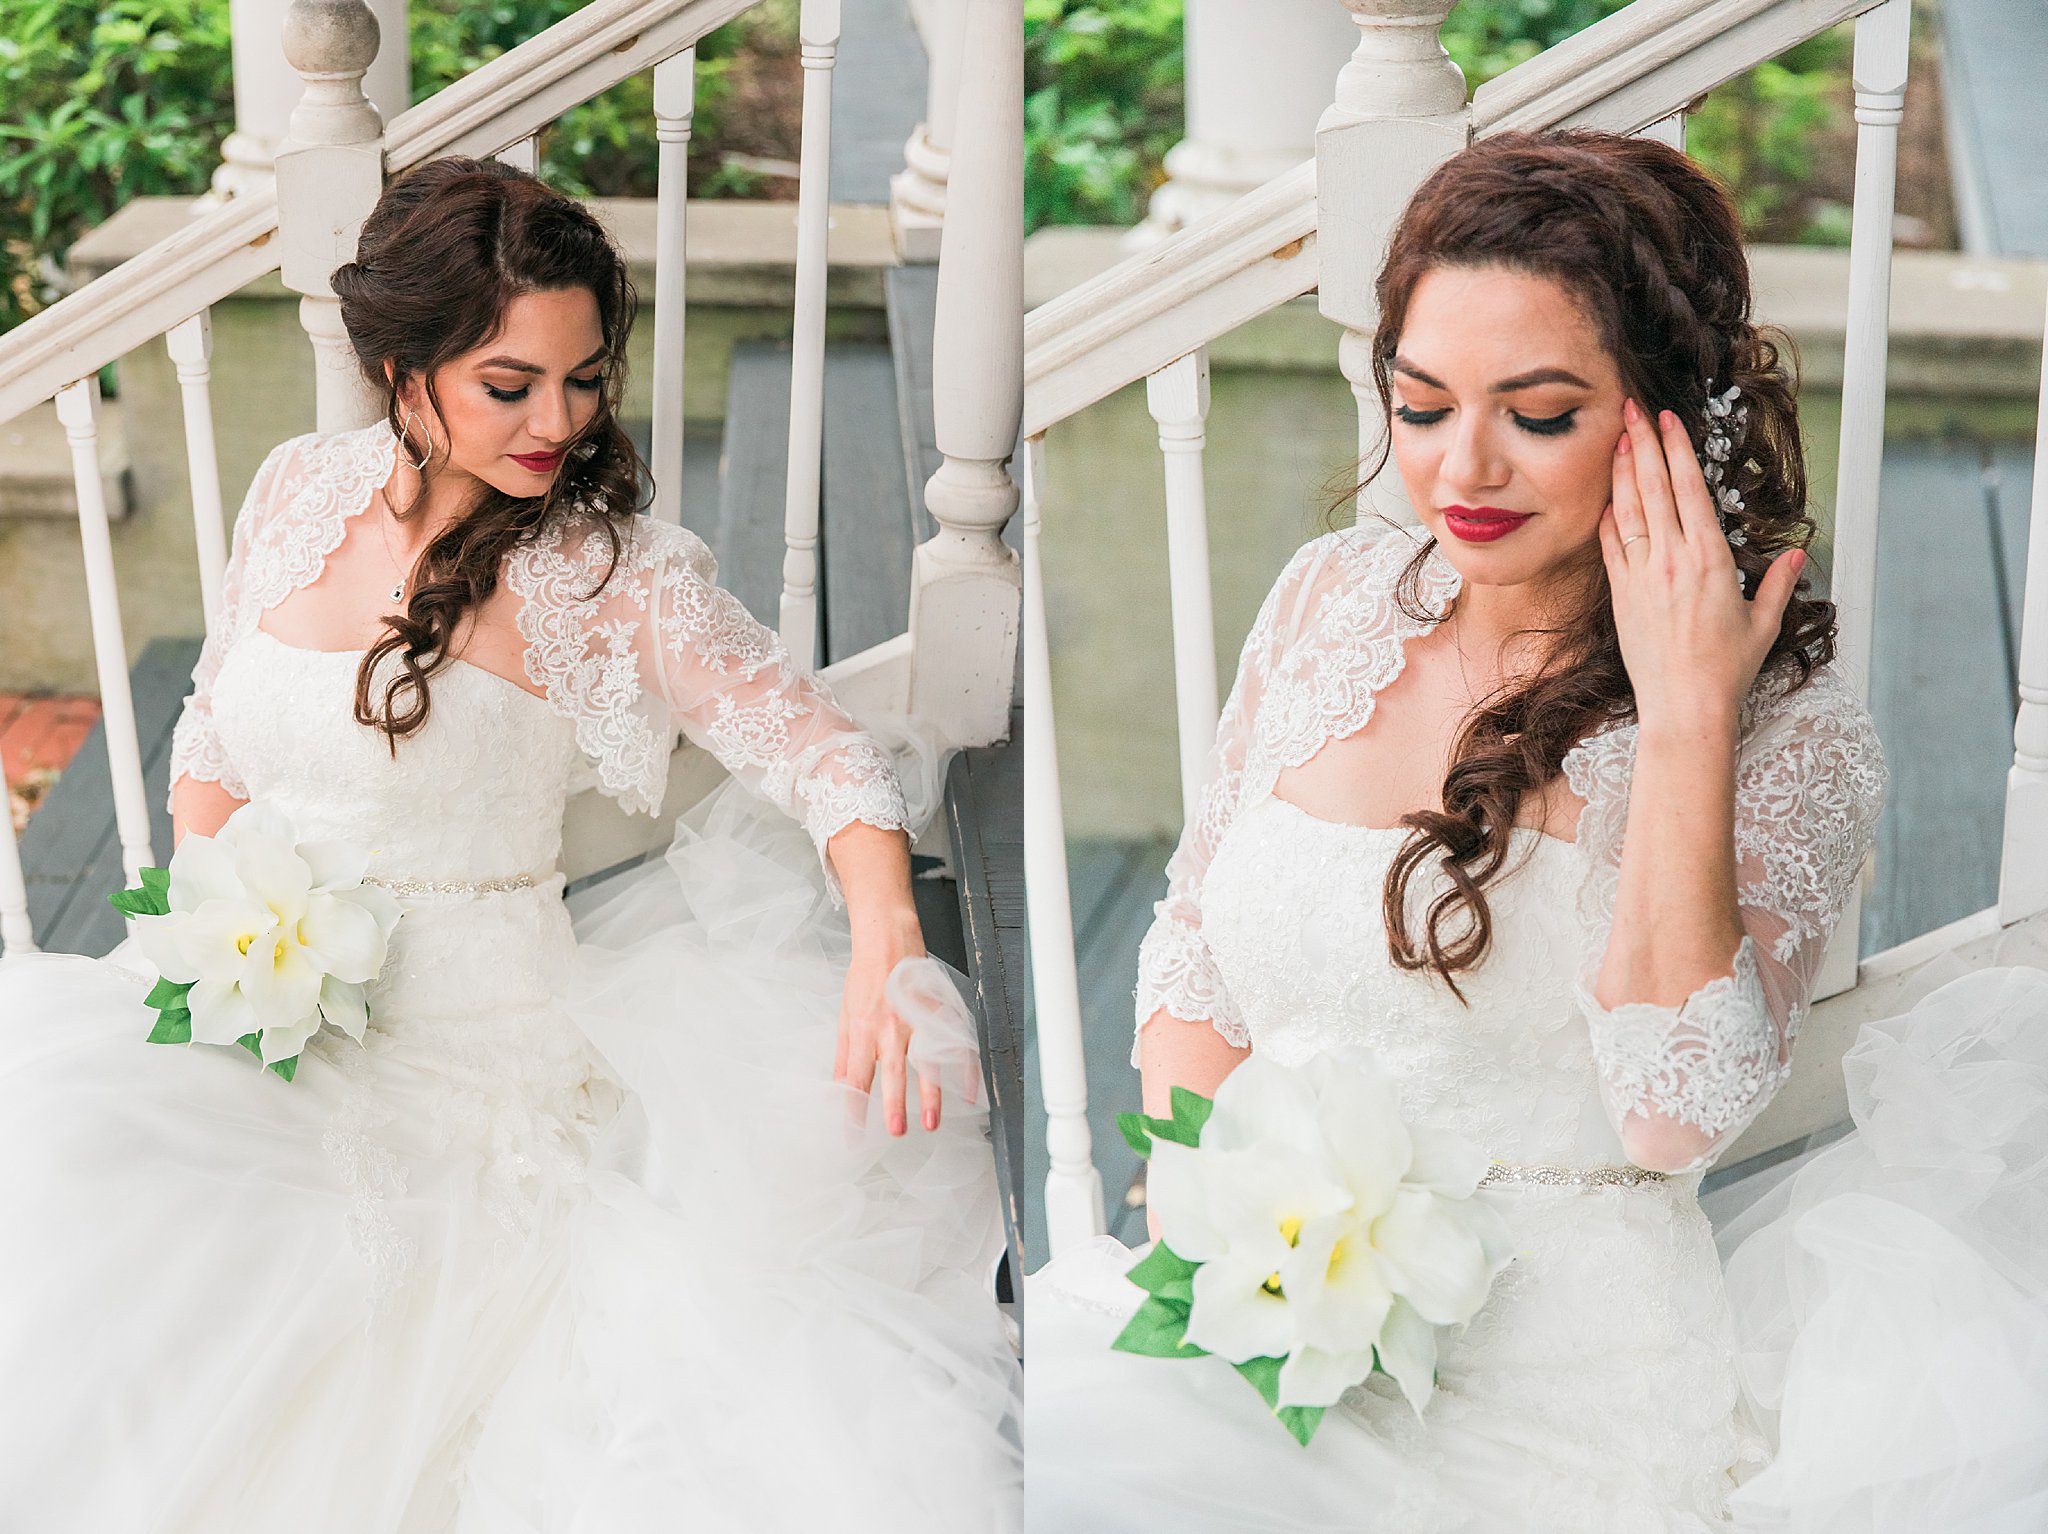 Bride in white wedding dress sitting on porch steps holding white bouquet